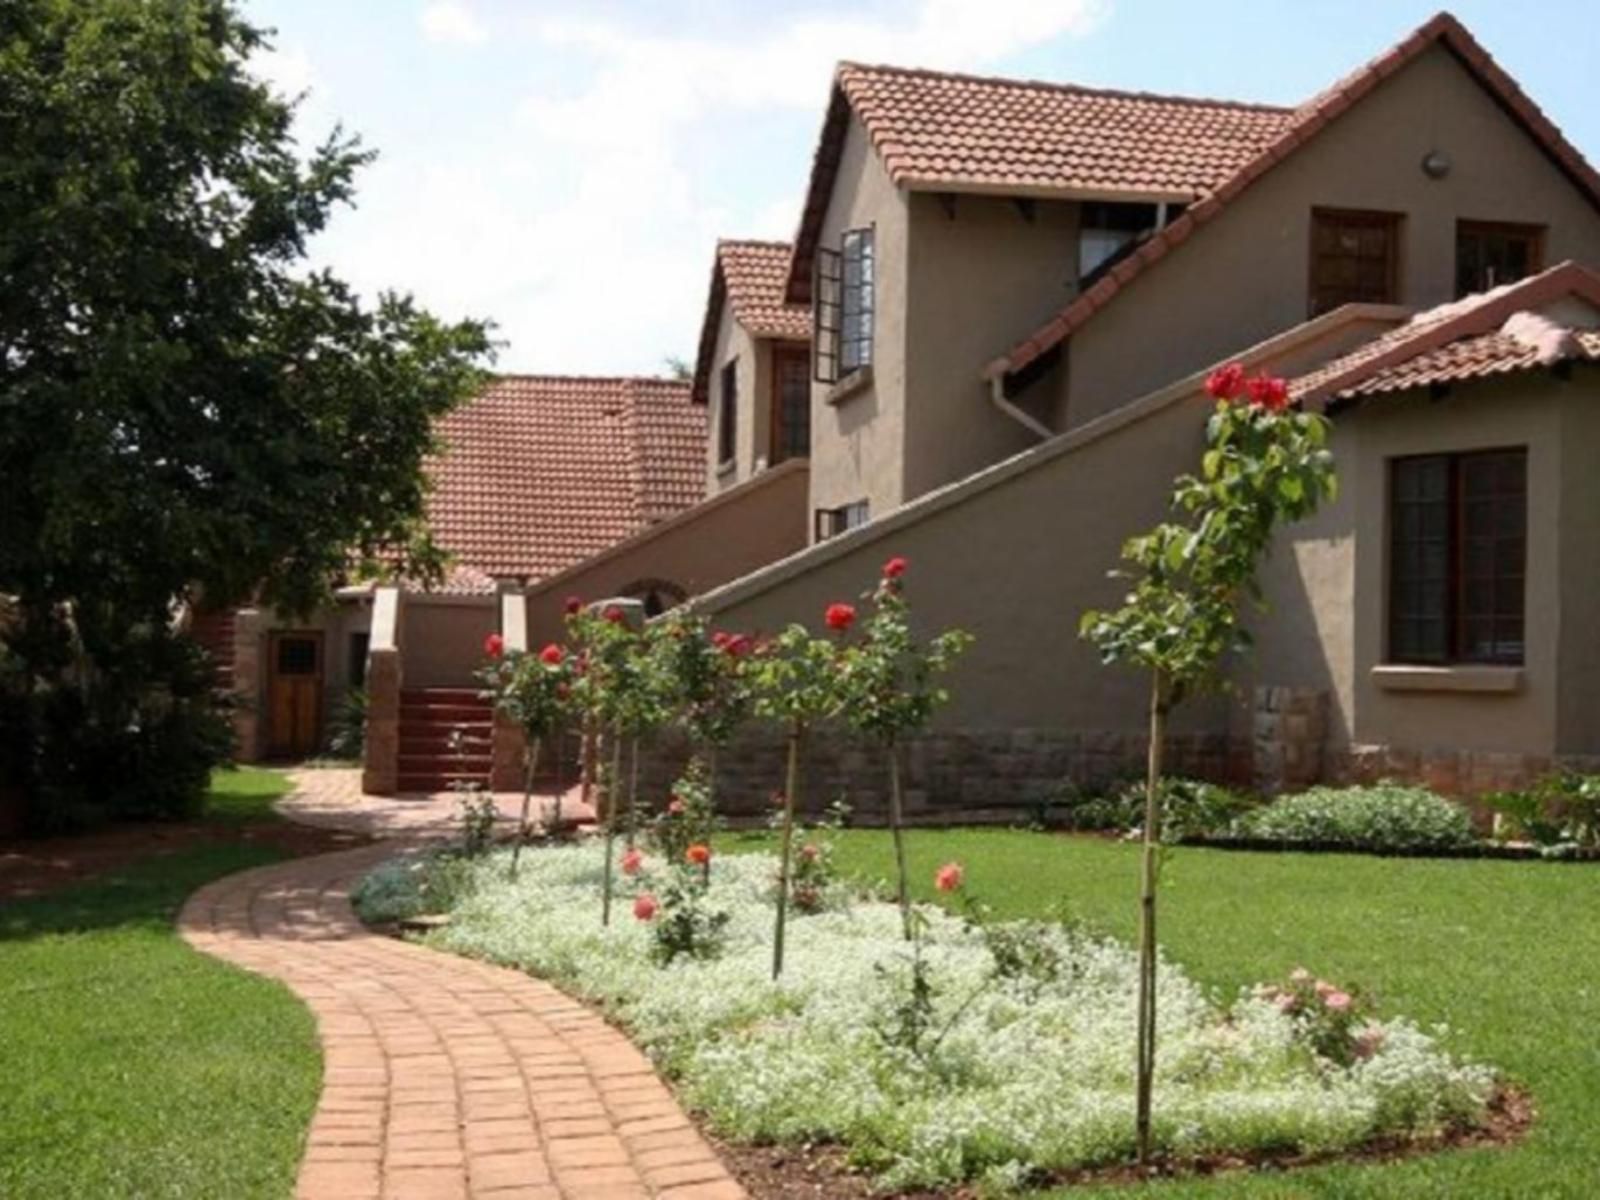 Bellstone Faerie Glen Pretoria Tshwane Gauteng South Africa House, Building, Architecture, Plant, Nature, Garden